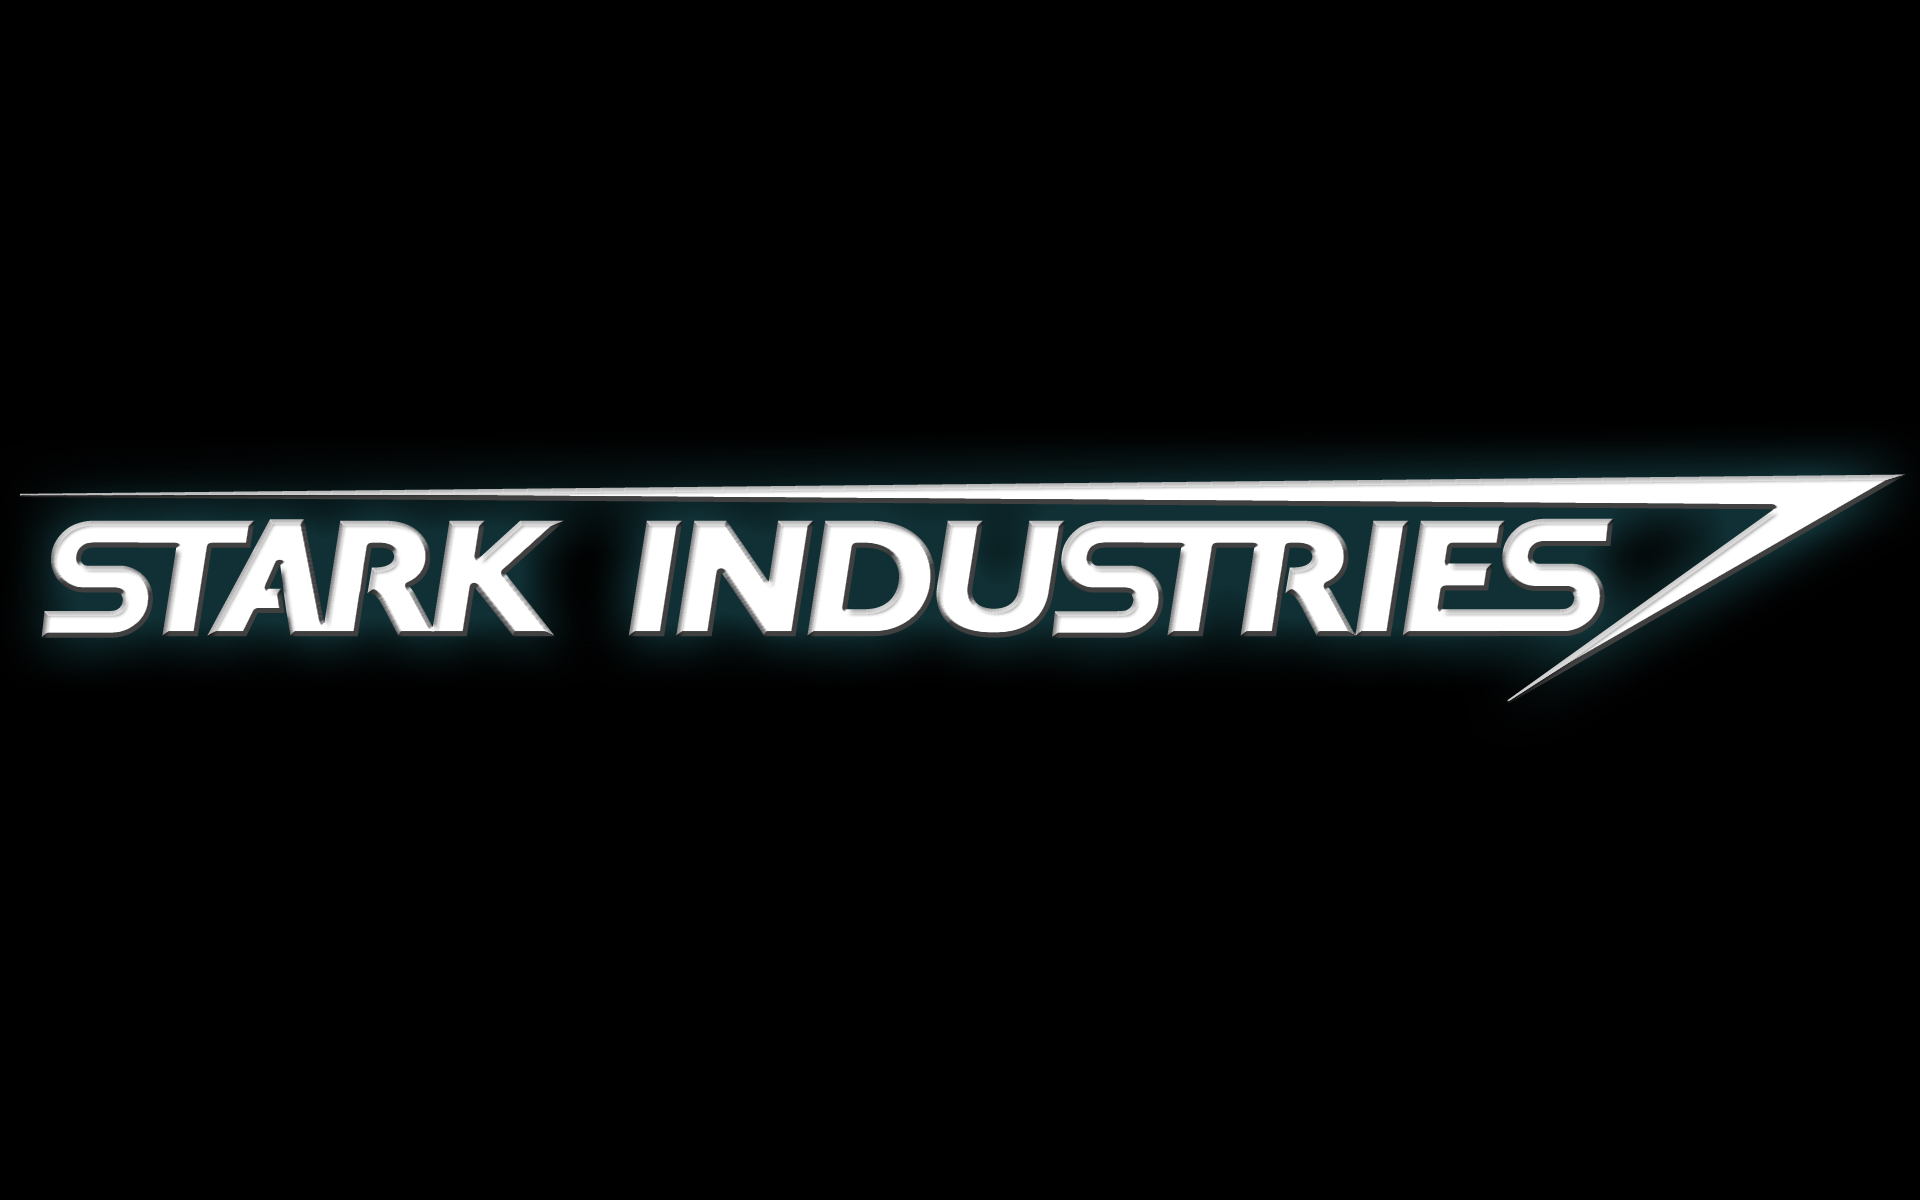 Stark Industries SuperHero Related Wallpapers